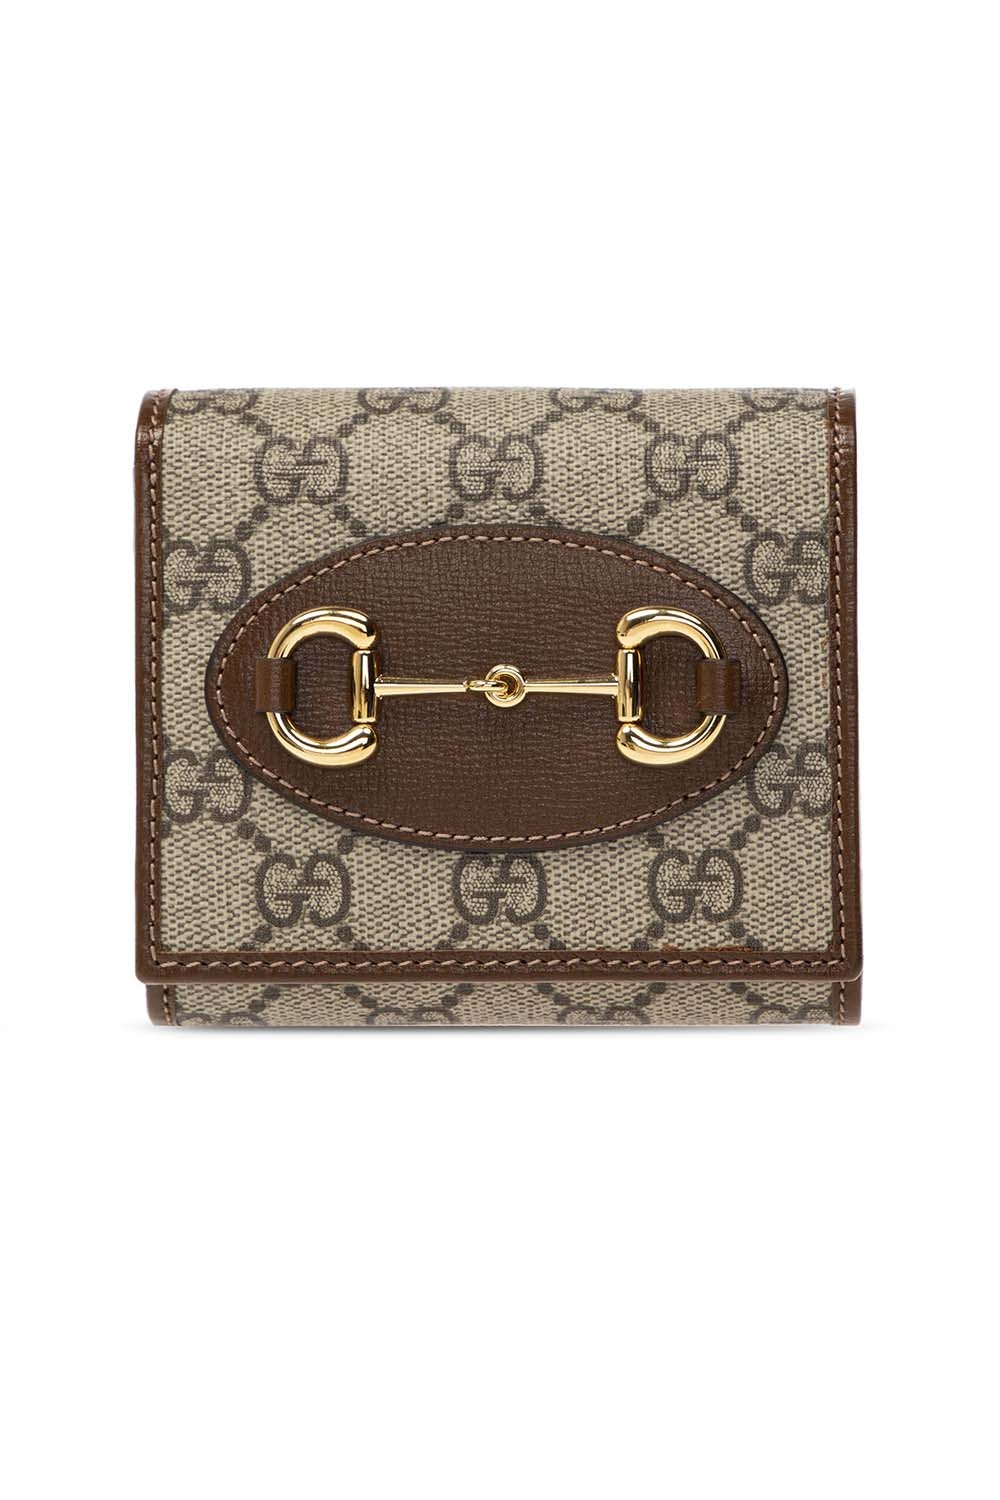 Gucci ‘GG Supreme’ canvas wallet